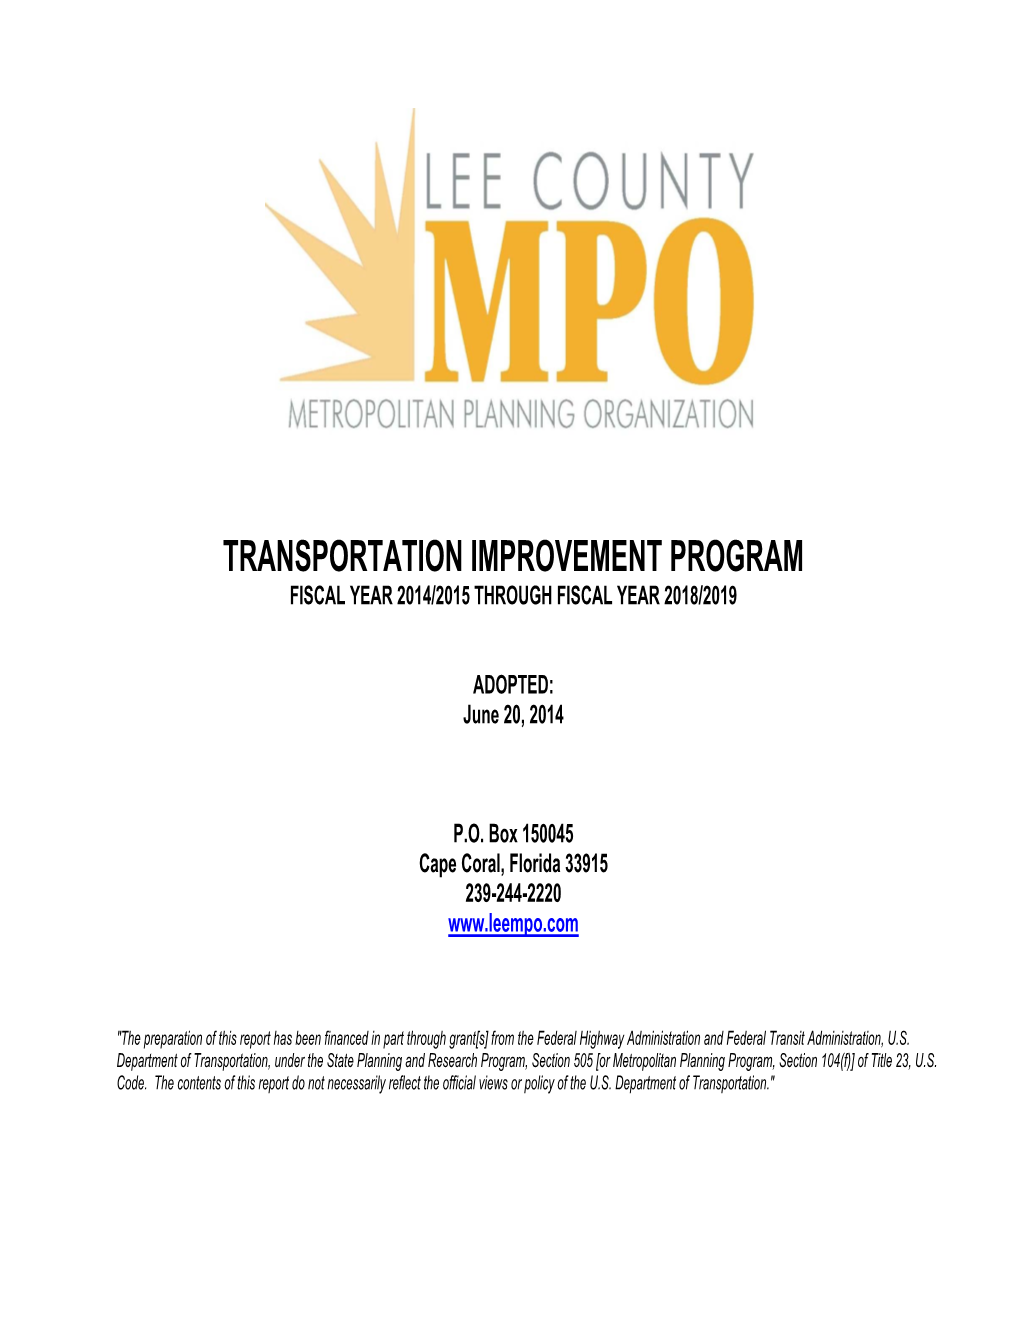 Transportation Improvement Program Fiscal Year 2014/2015 Through Fiscal Year 2018/2019